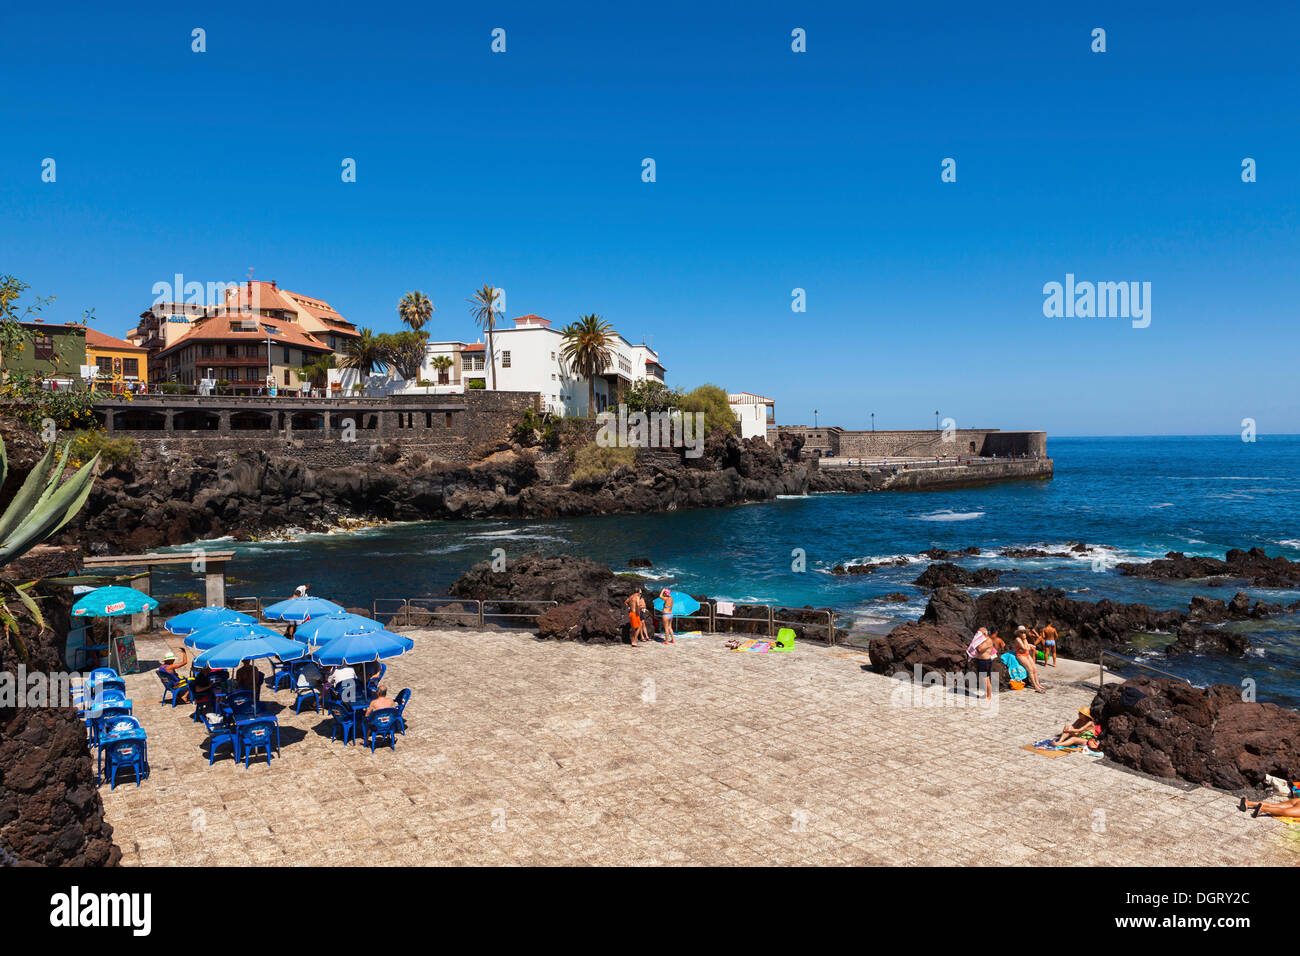 Promenade au bord de l'eau, Puerto de la Cruz, San Telmo, Puerto De La Cruz, Tenerife, Canaries, Espagne Banque D'Images